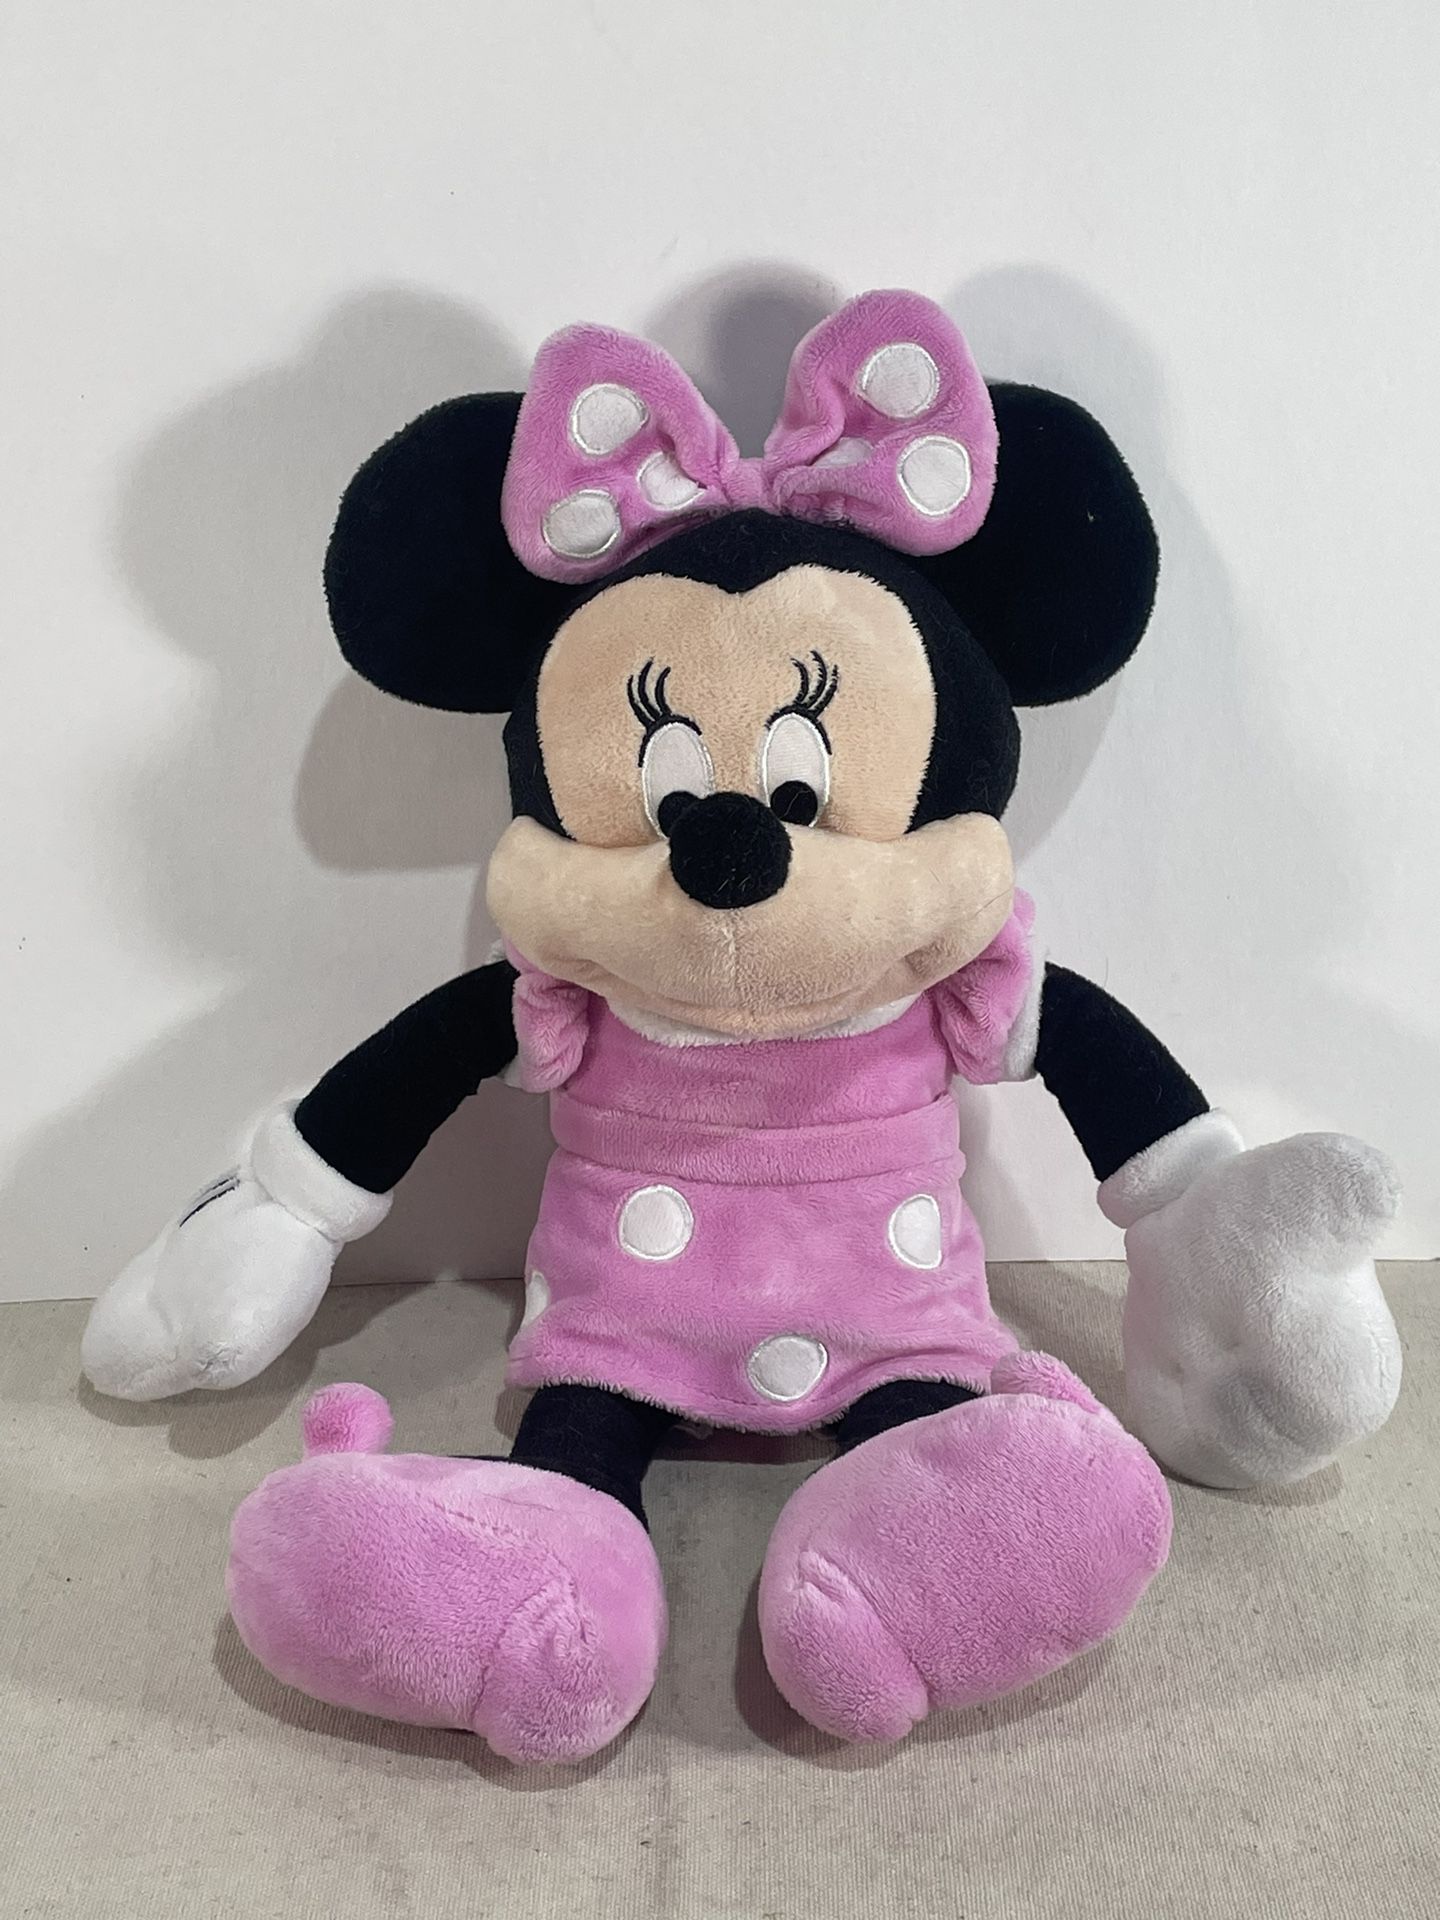 Disney Minnie Mouse 10" Plush Pink dress Stuffed Animal Just Play LLC